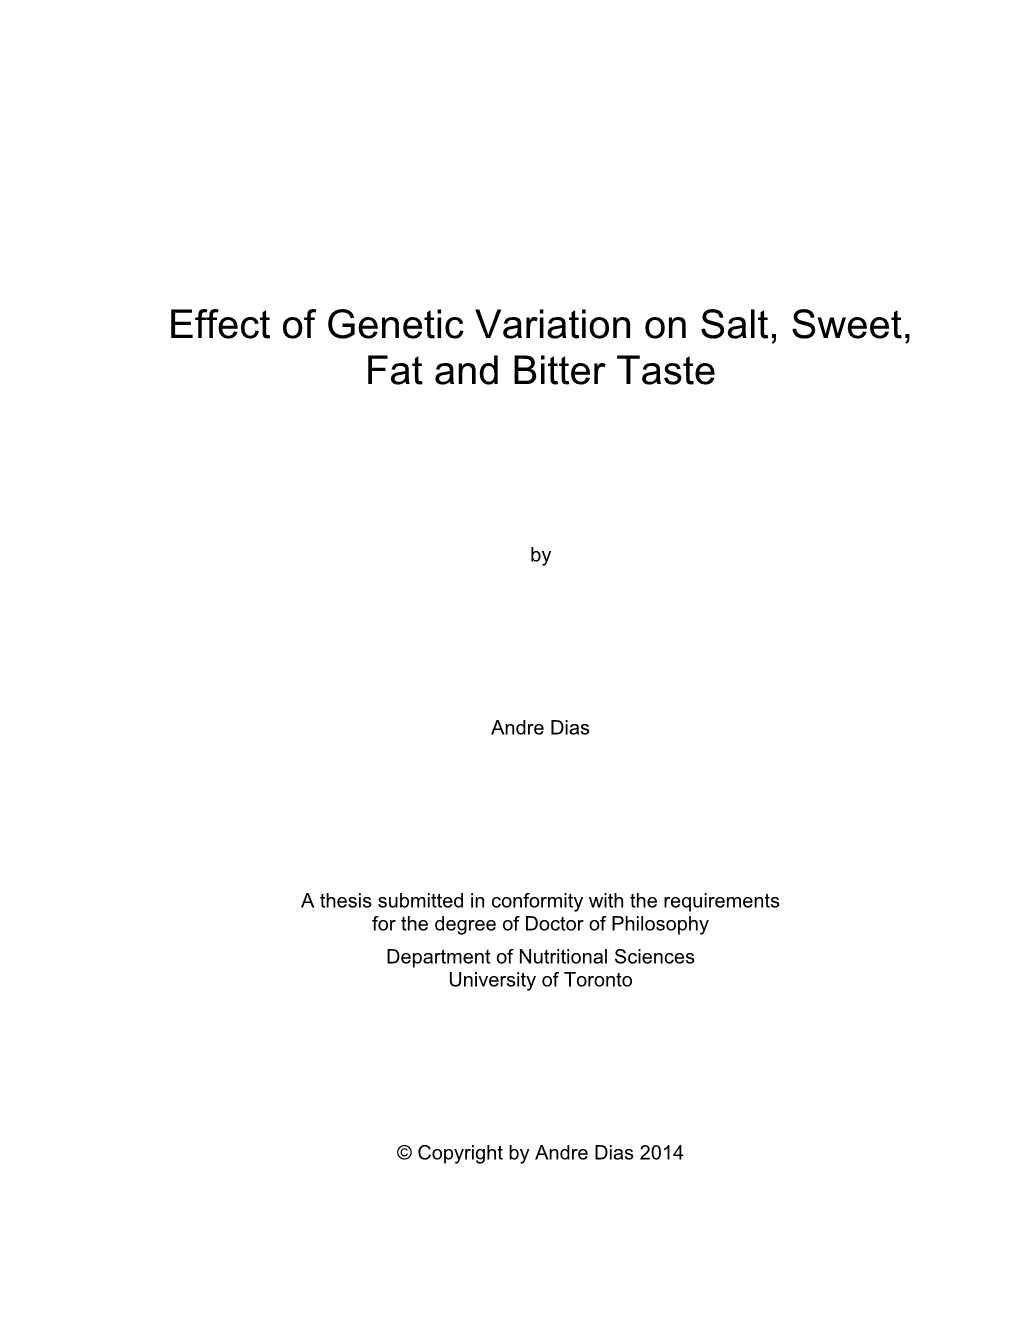 Effect of Genetic Variation on Salt, Sweet, Fat and Bitter Taste